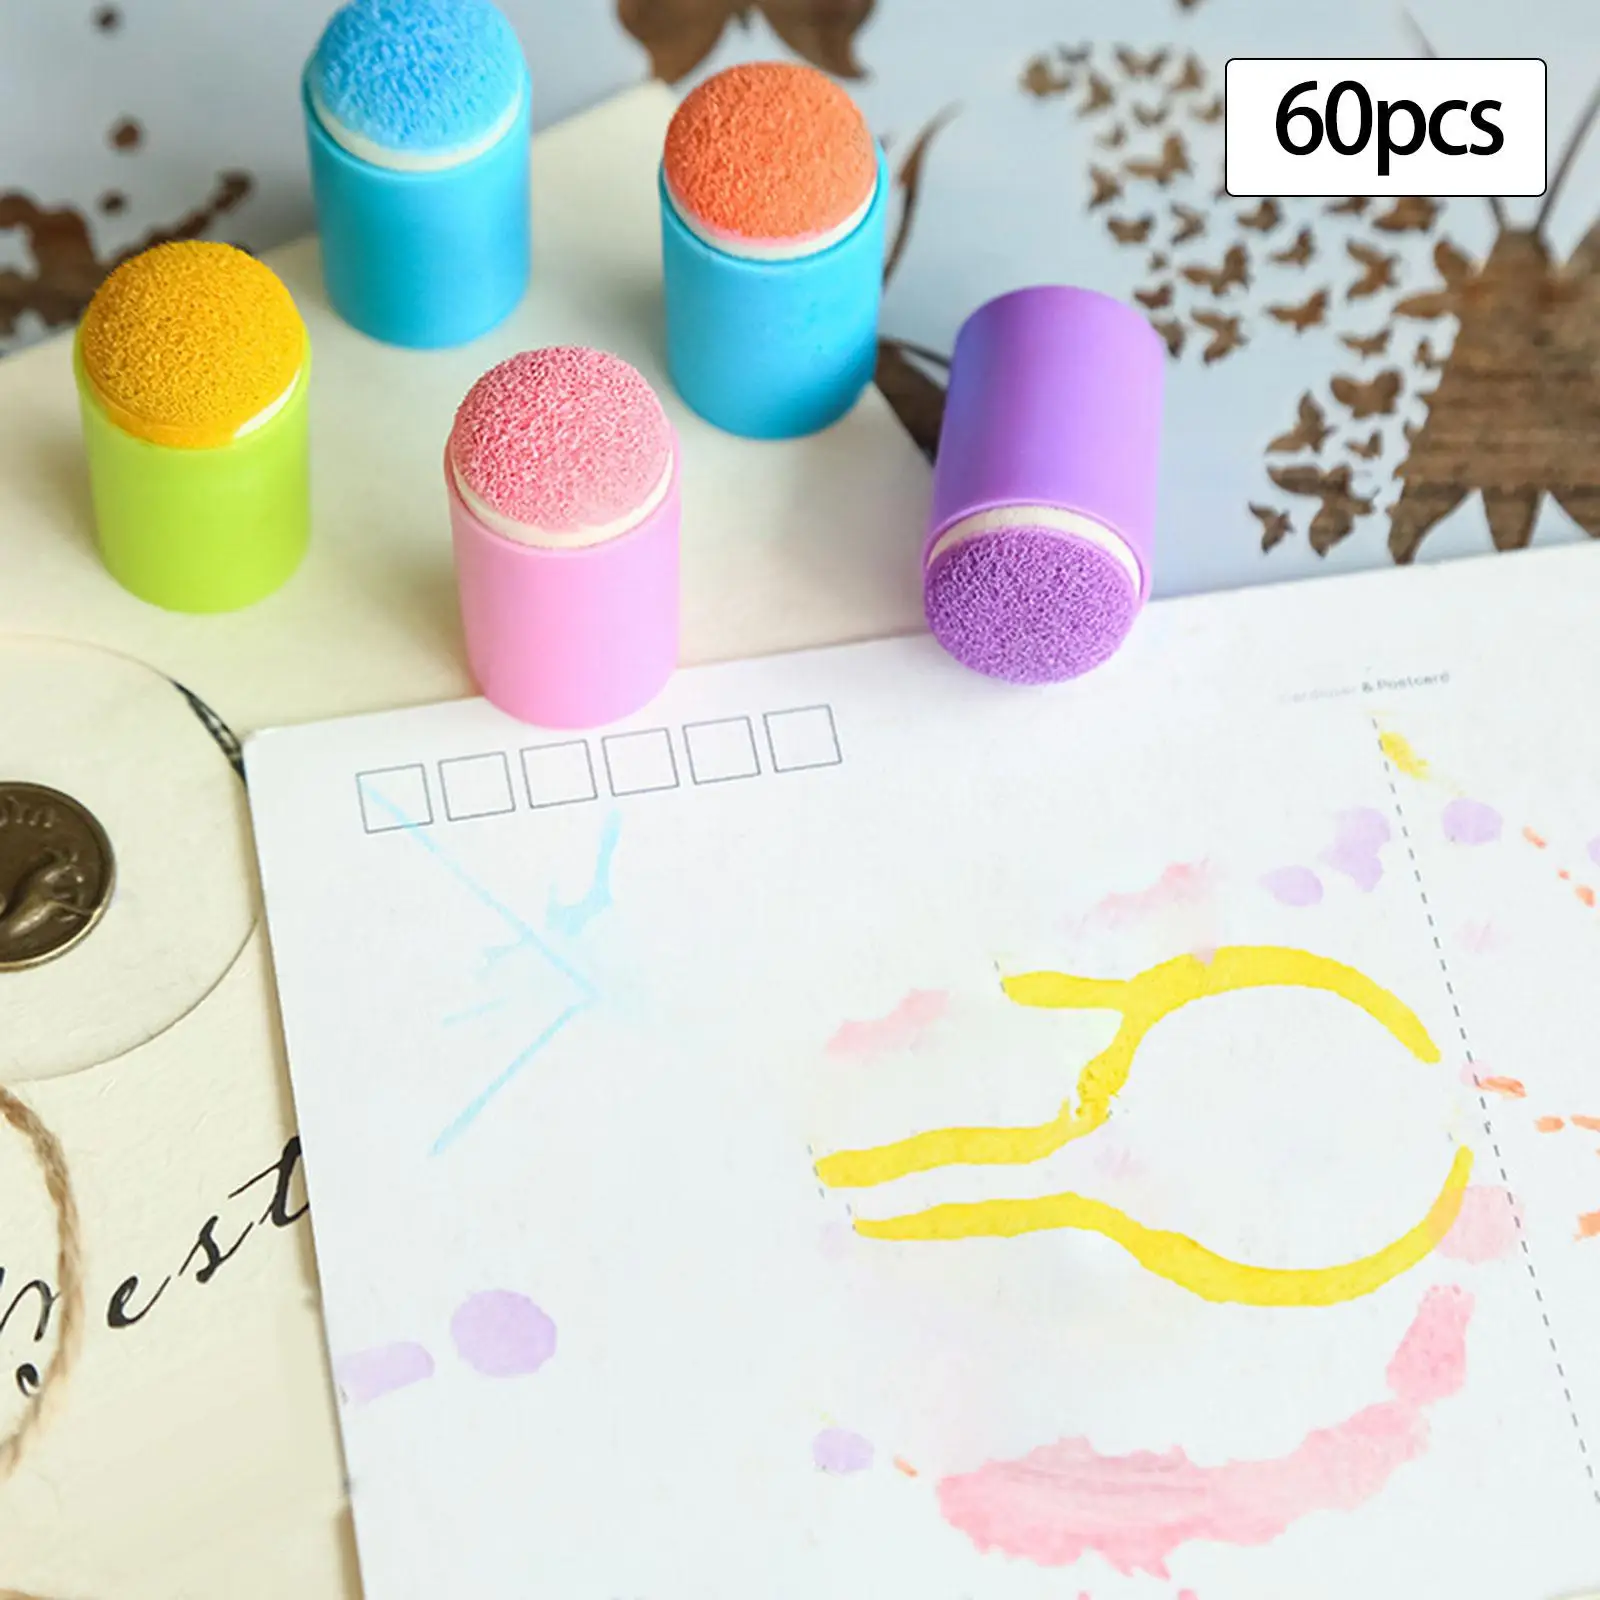 60 Pieces Finger Sponge Daubers for Art Crafts Applying Card Making DIY Scrapbook